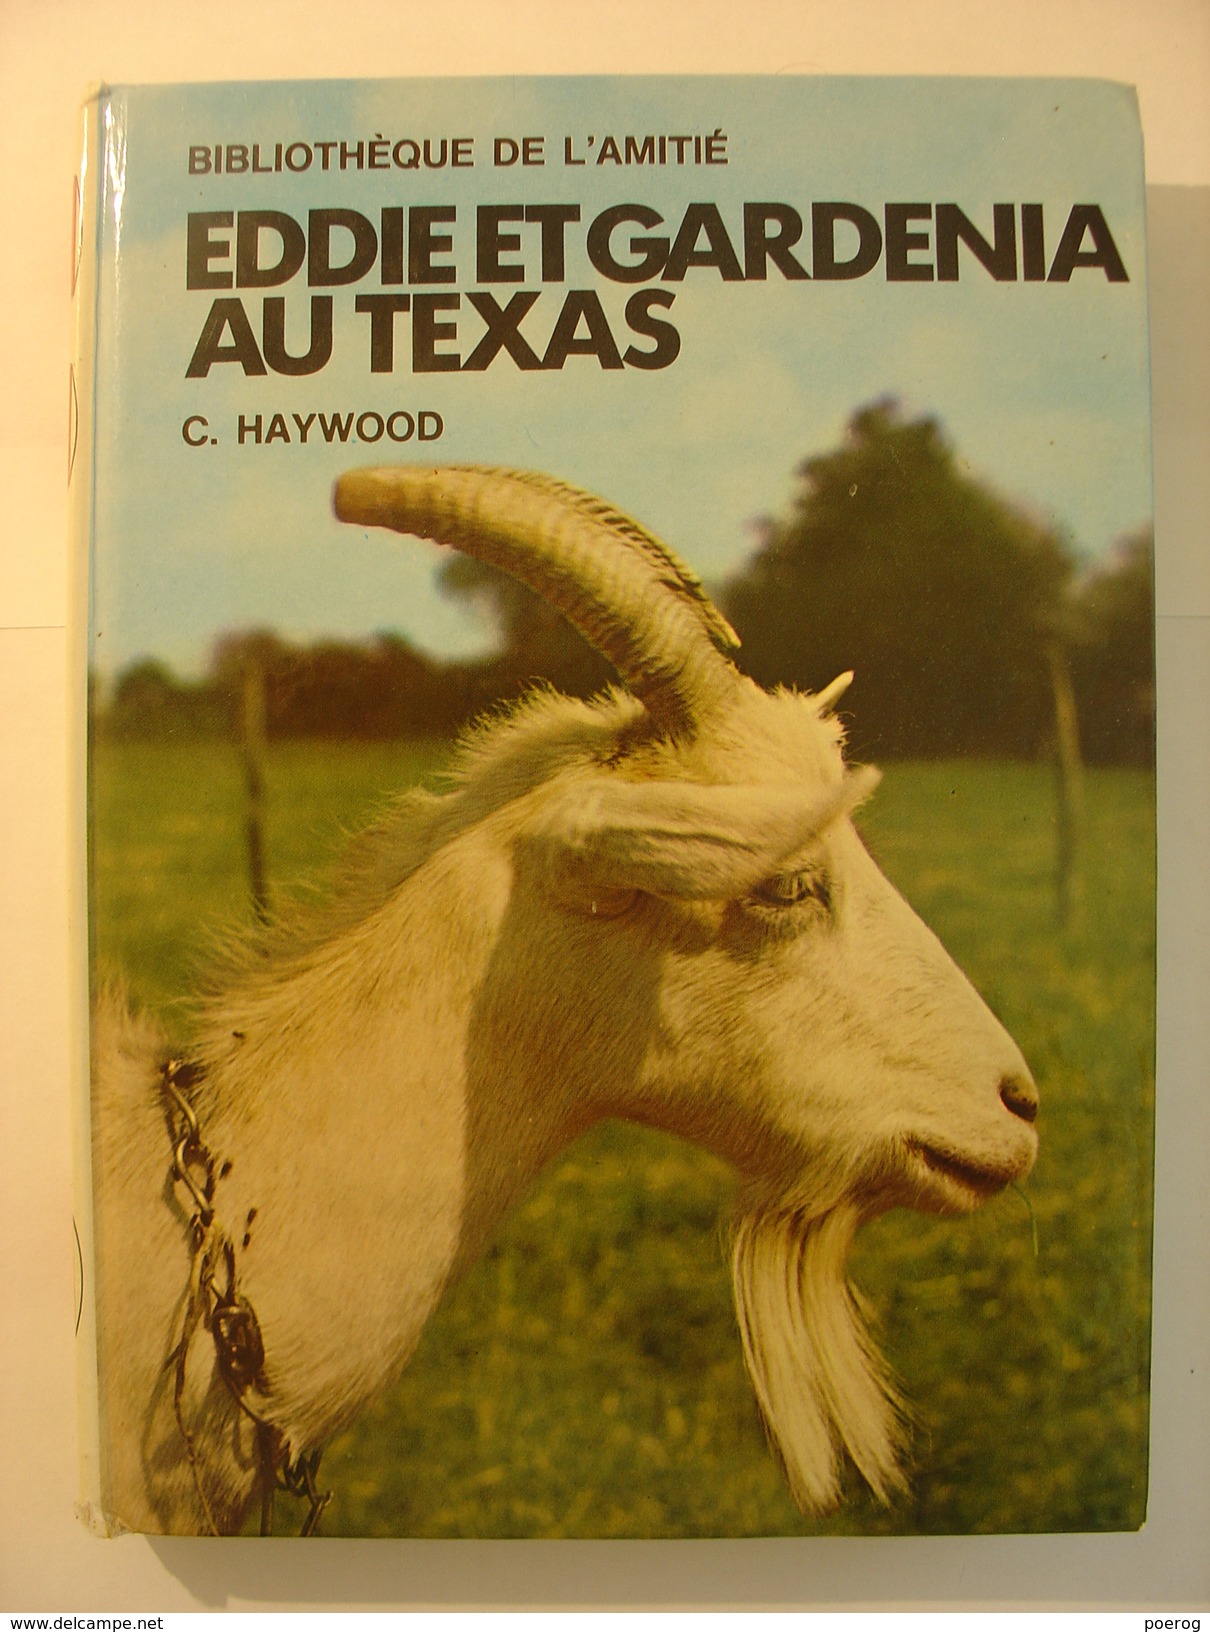 EDDIE ET GARDENIA AU TEXAS - C. HAYWOOD - Bibliothèque De L' Amitié - 1976 - Illustrations HARISPE - Chèvre - Bibliotheque De L'Amitie